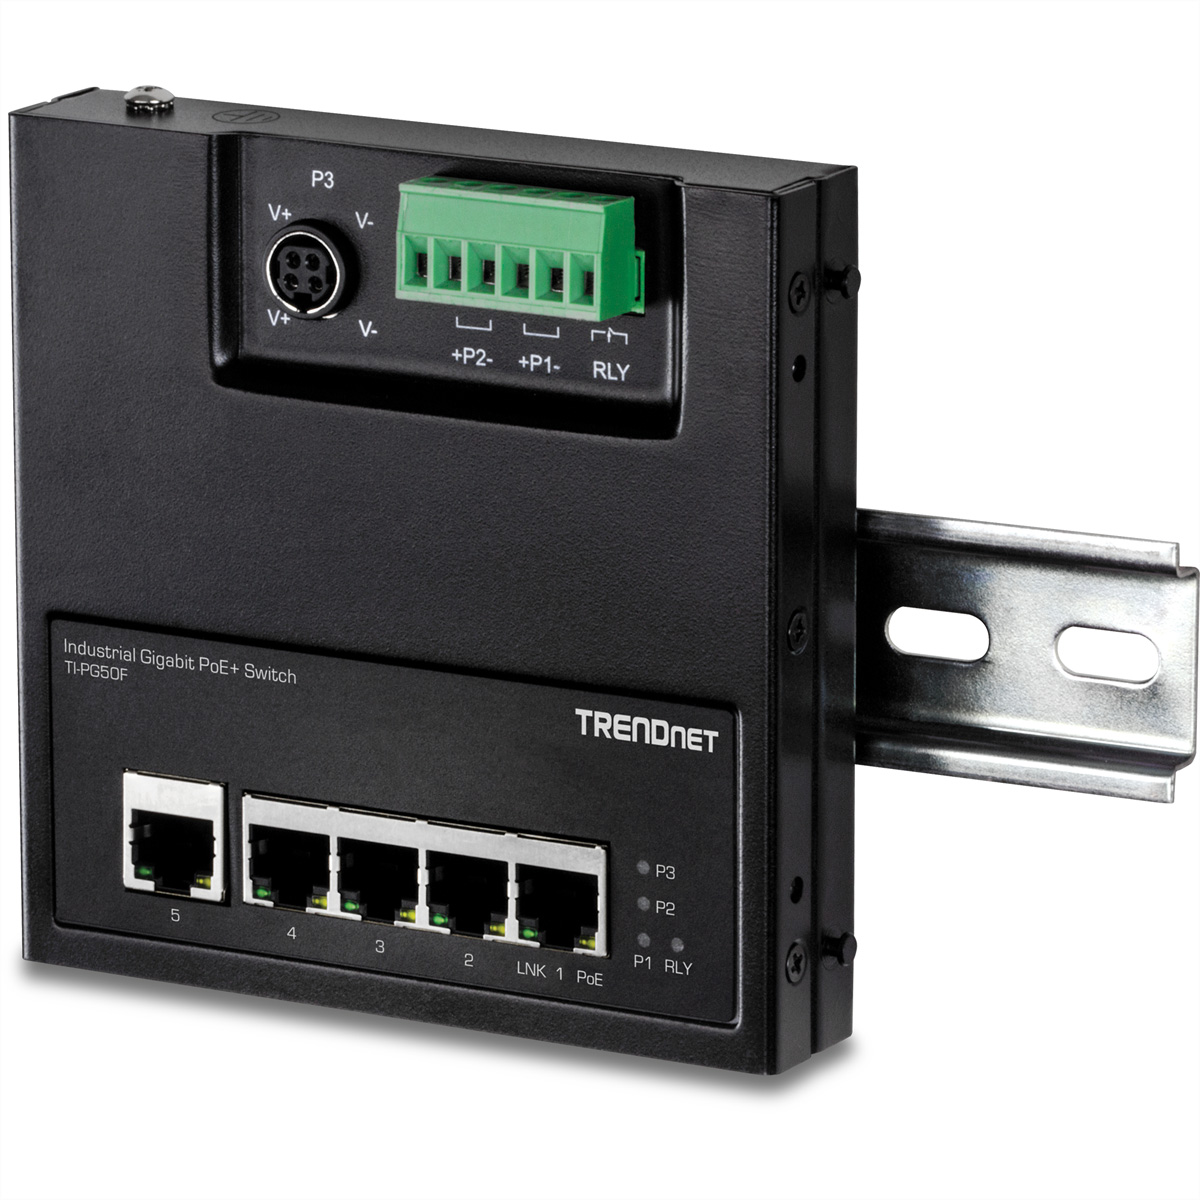 TRENDNET TI-PG50F Switch Front Gigabit Gigabit 5-Port Access PoE+ PoE Switch Industrial